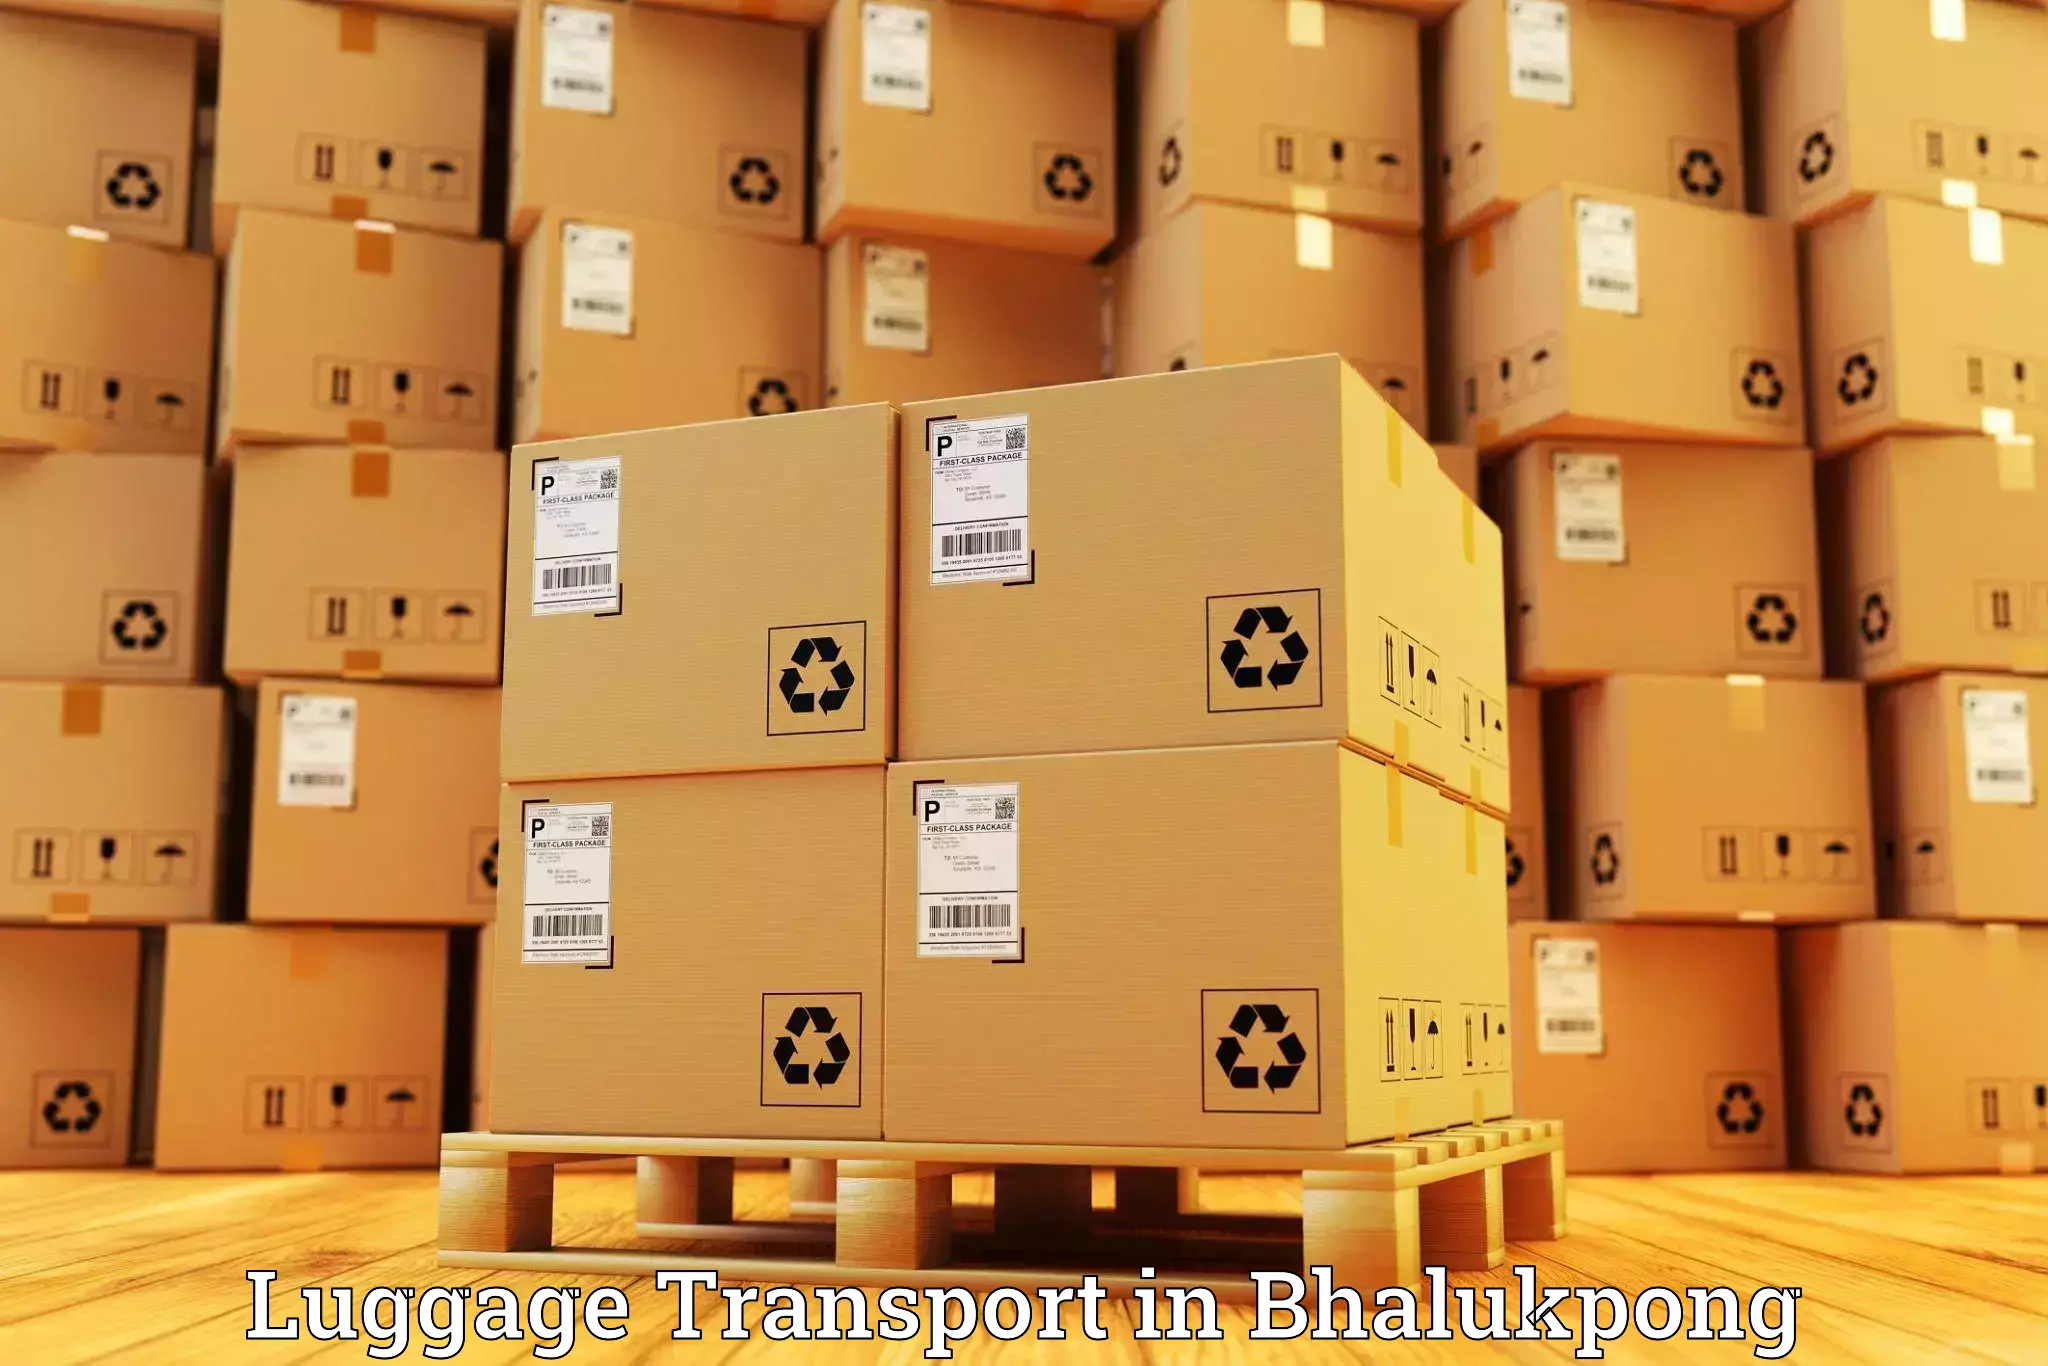 Multi-destination luggage transport in Bhalukpong